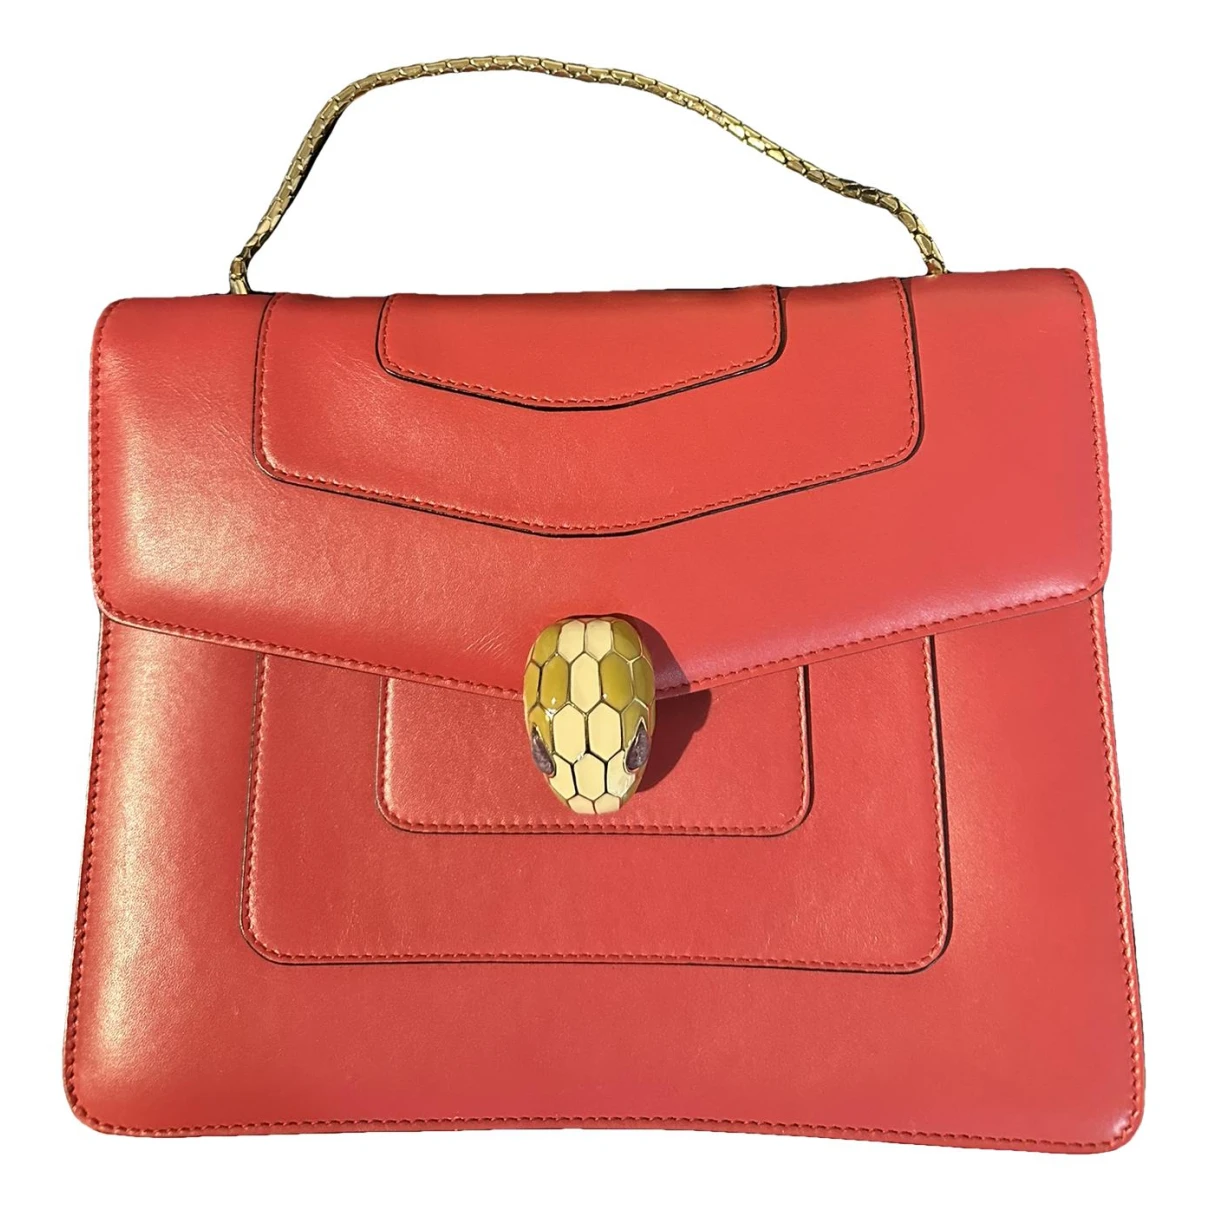 Pre-owned Bvlgari Serpenti Leather Handbag In Red